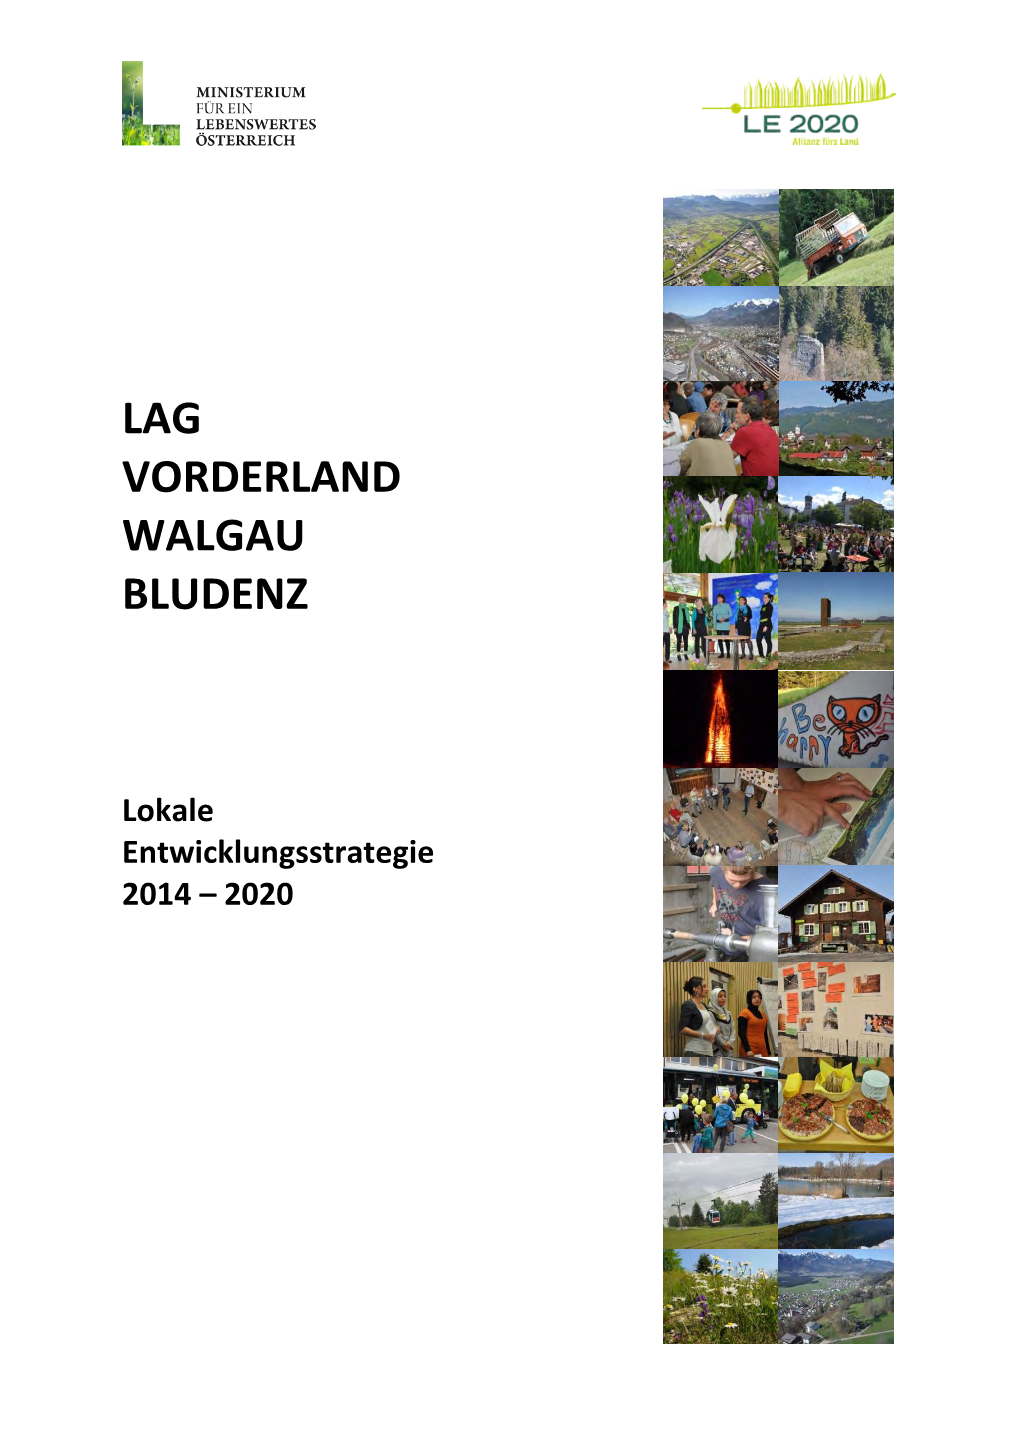 Lag Vorderland Walgau Bludenz